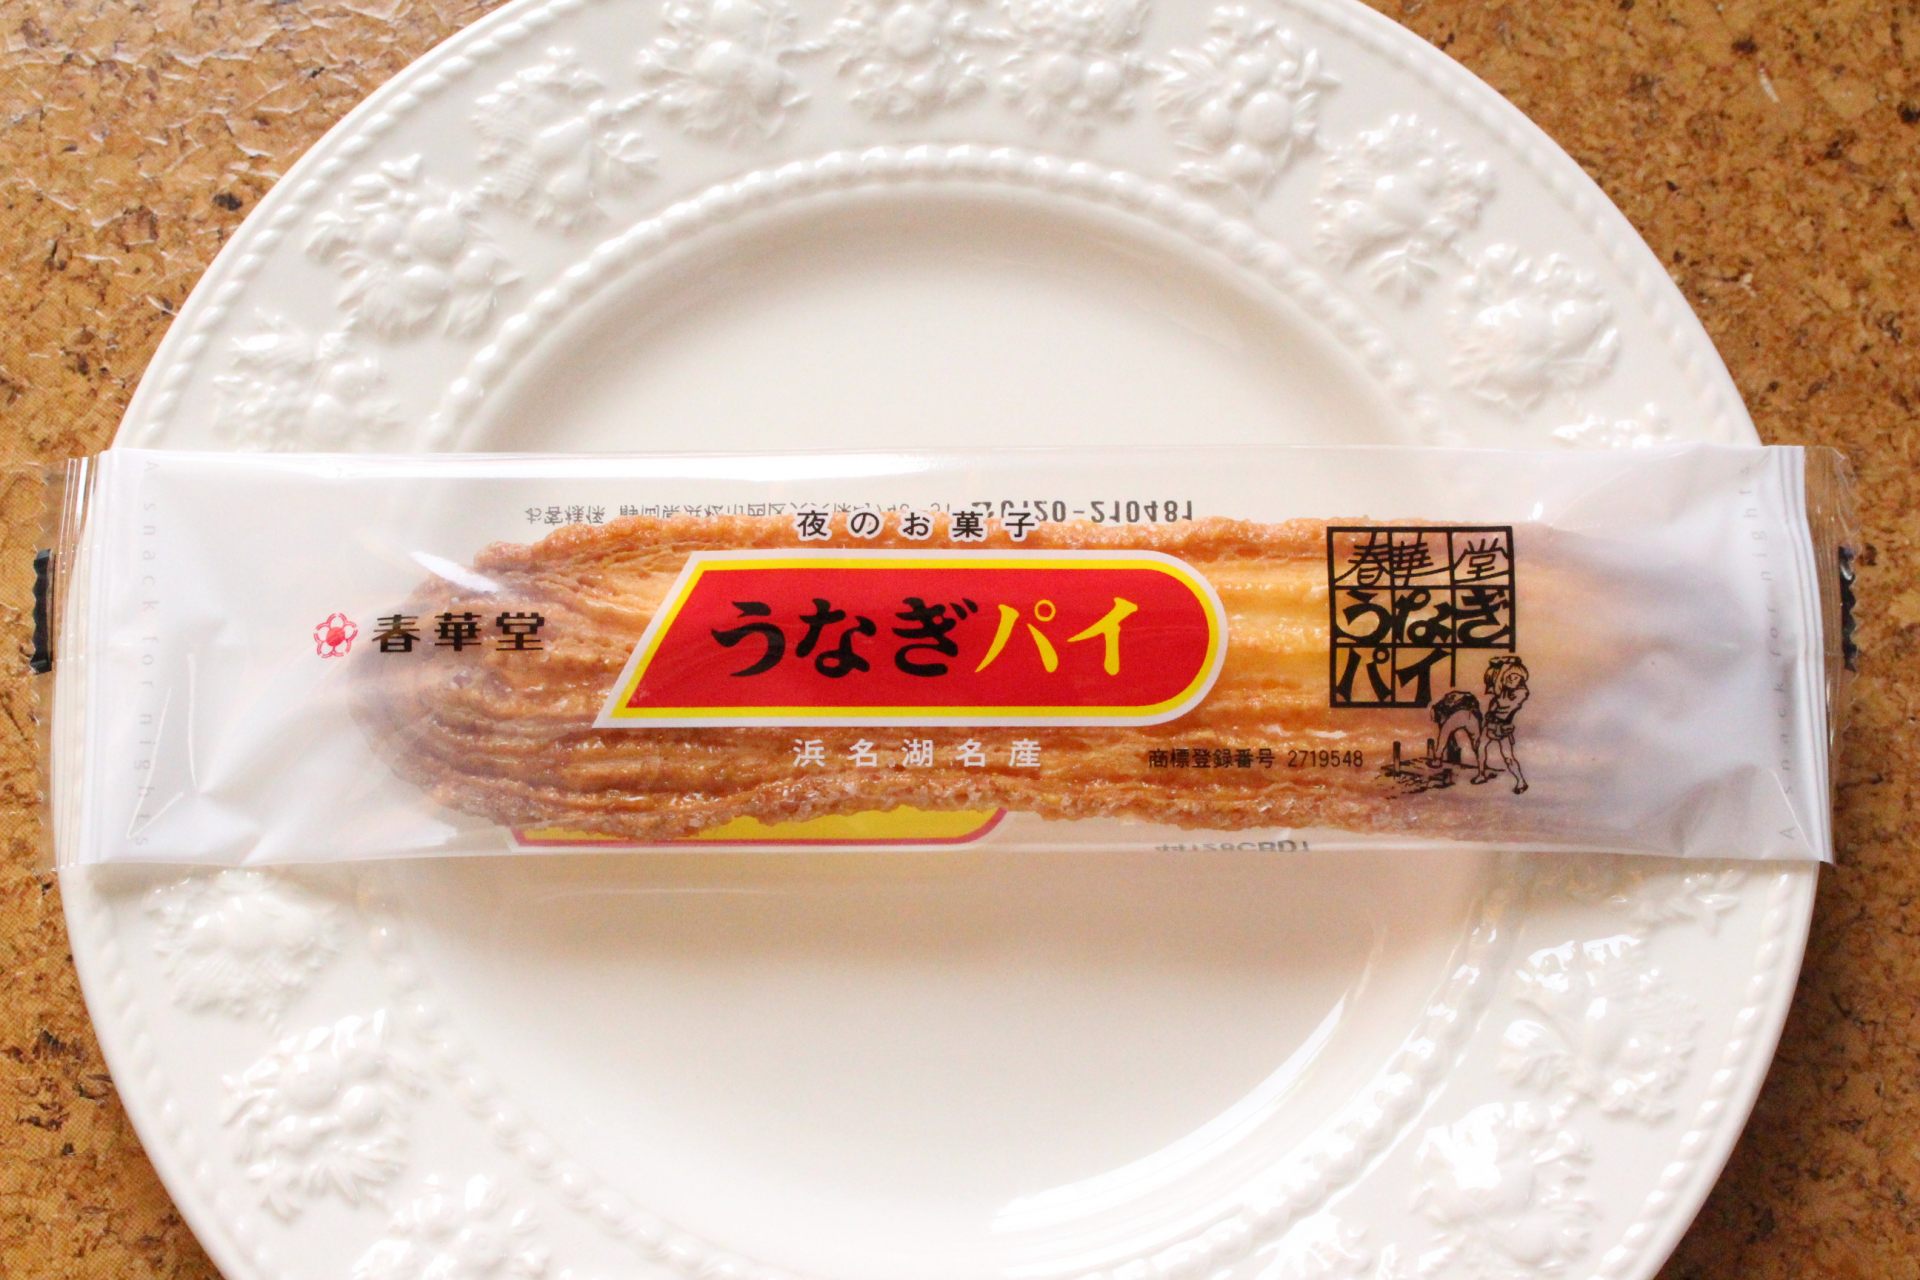 Unagi Pie – Eel Pie from Shizuoka prefecture